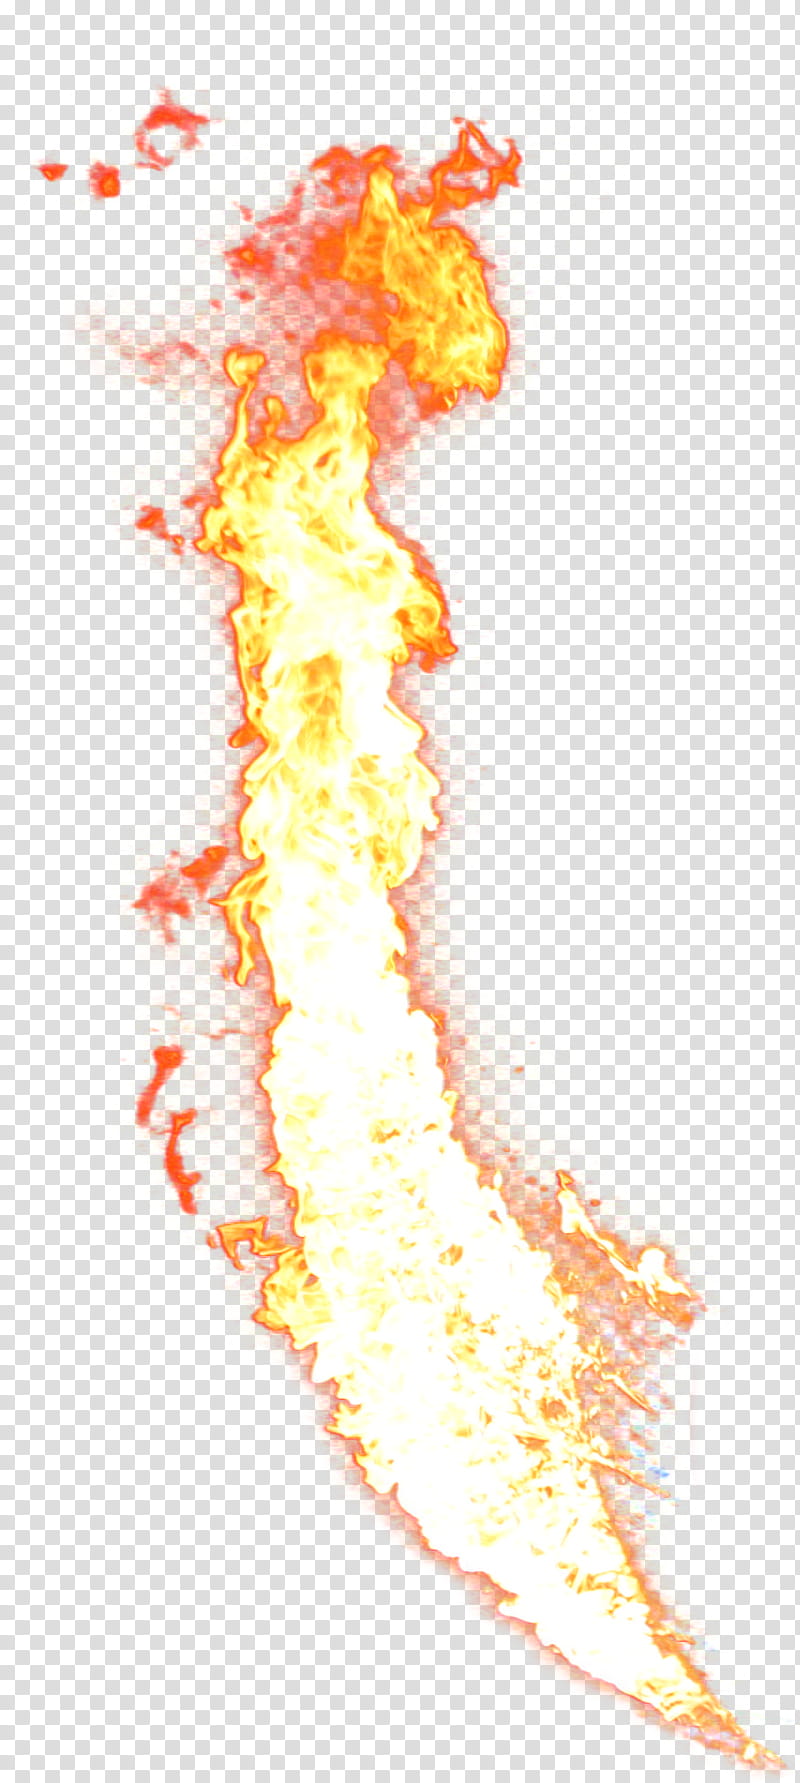 Flames I transparent background PNG clipart